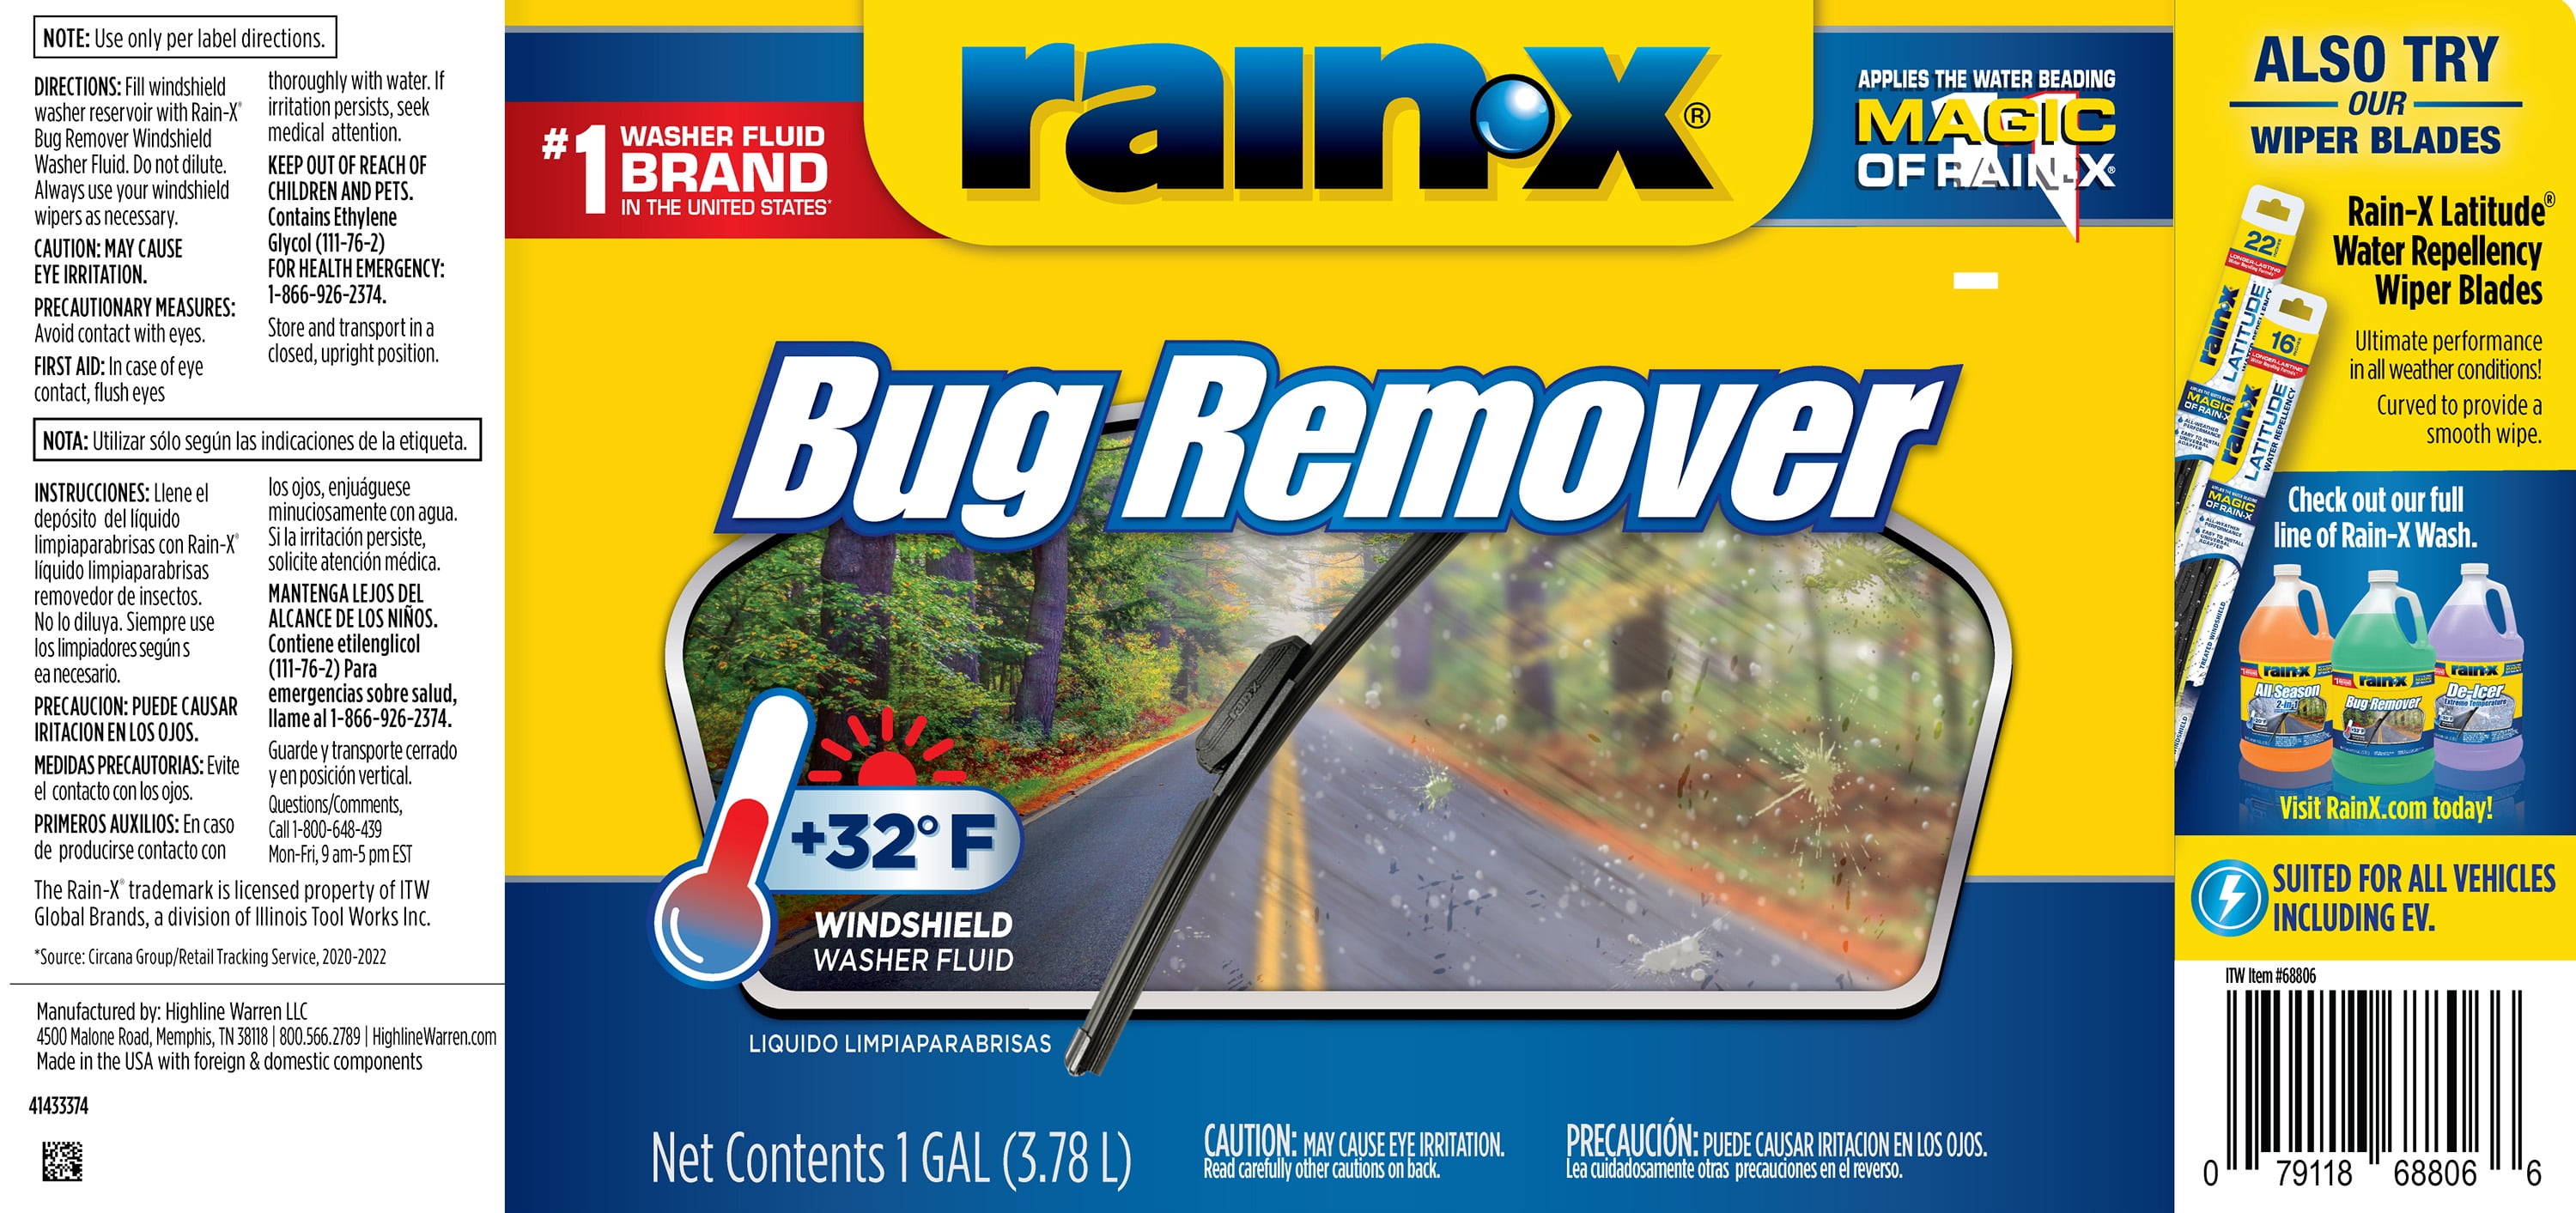 Rain-X 128 fl. oz. +32°F Degree Bug Remover Windshield Washer Fluid 113605  - The Home Depot